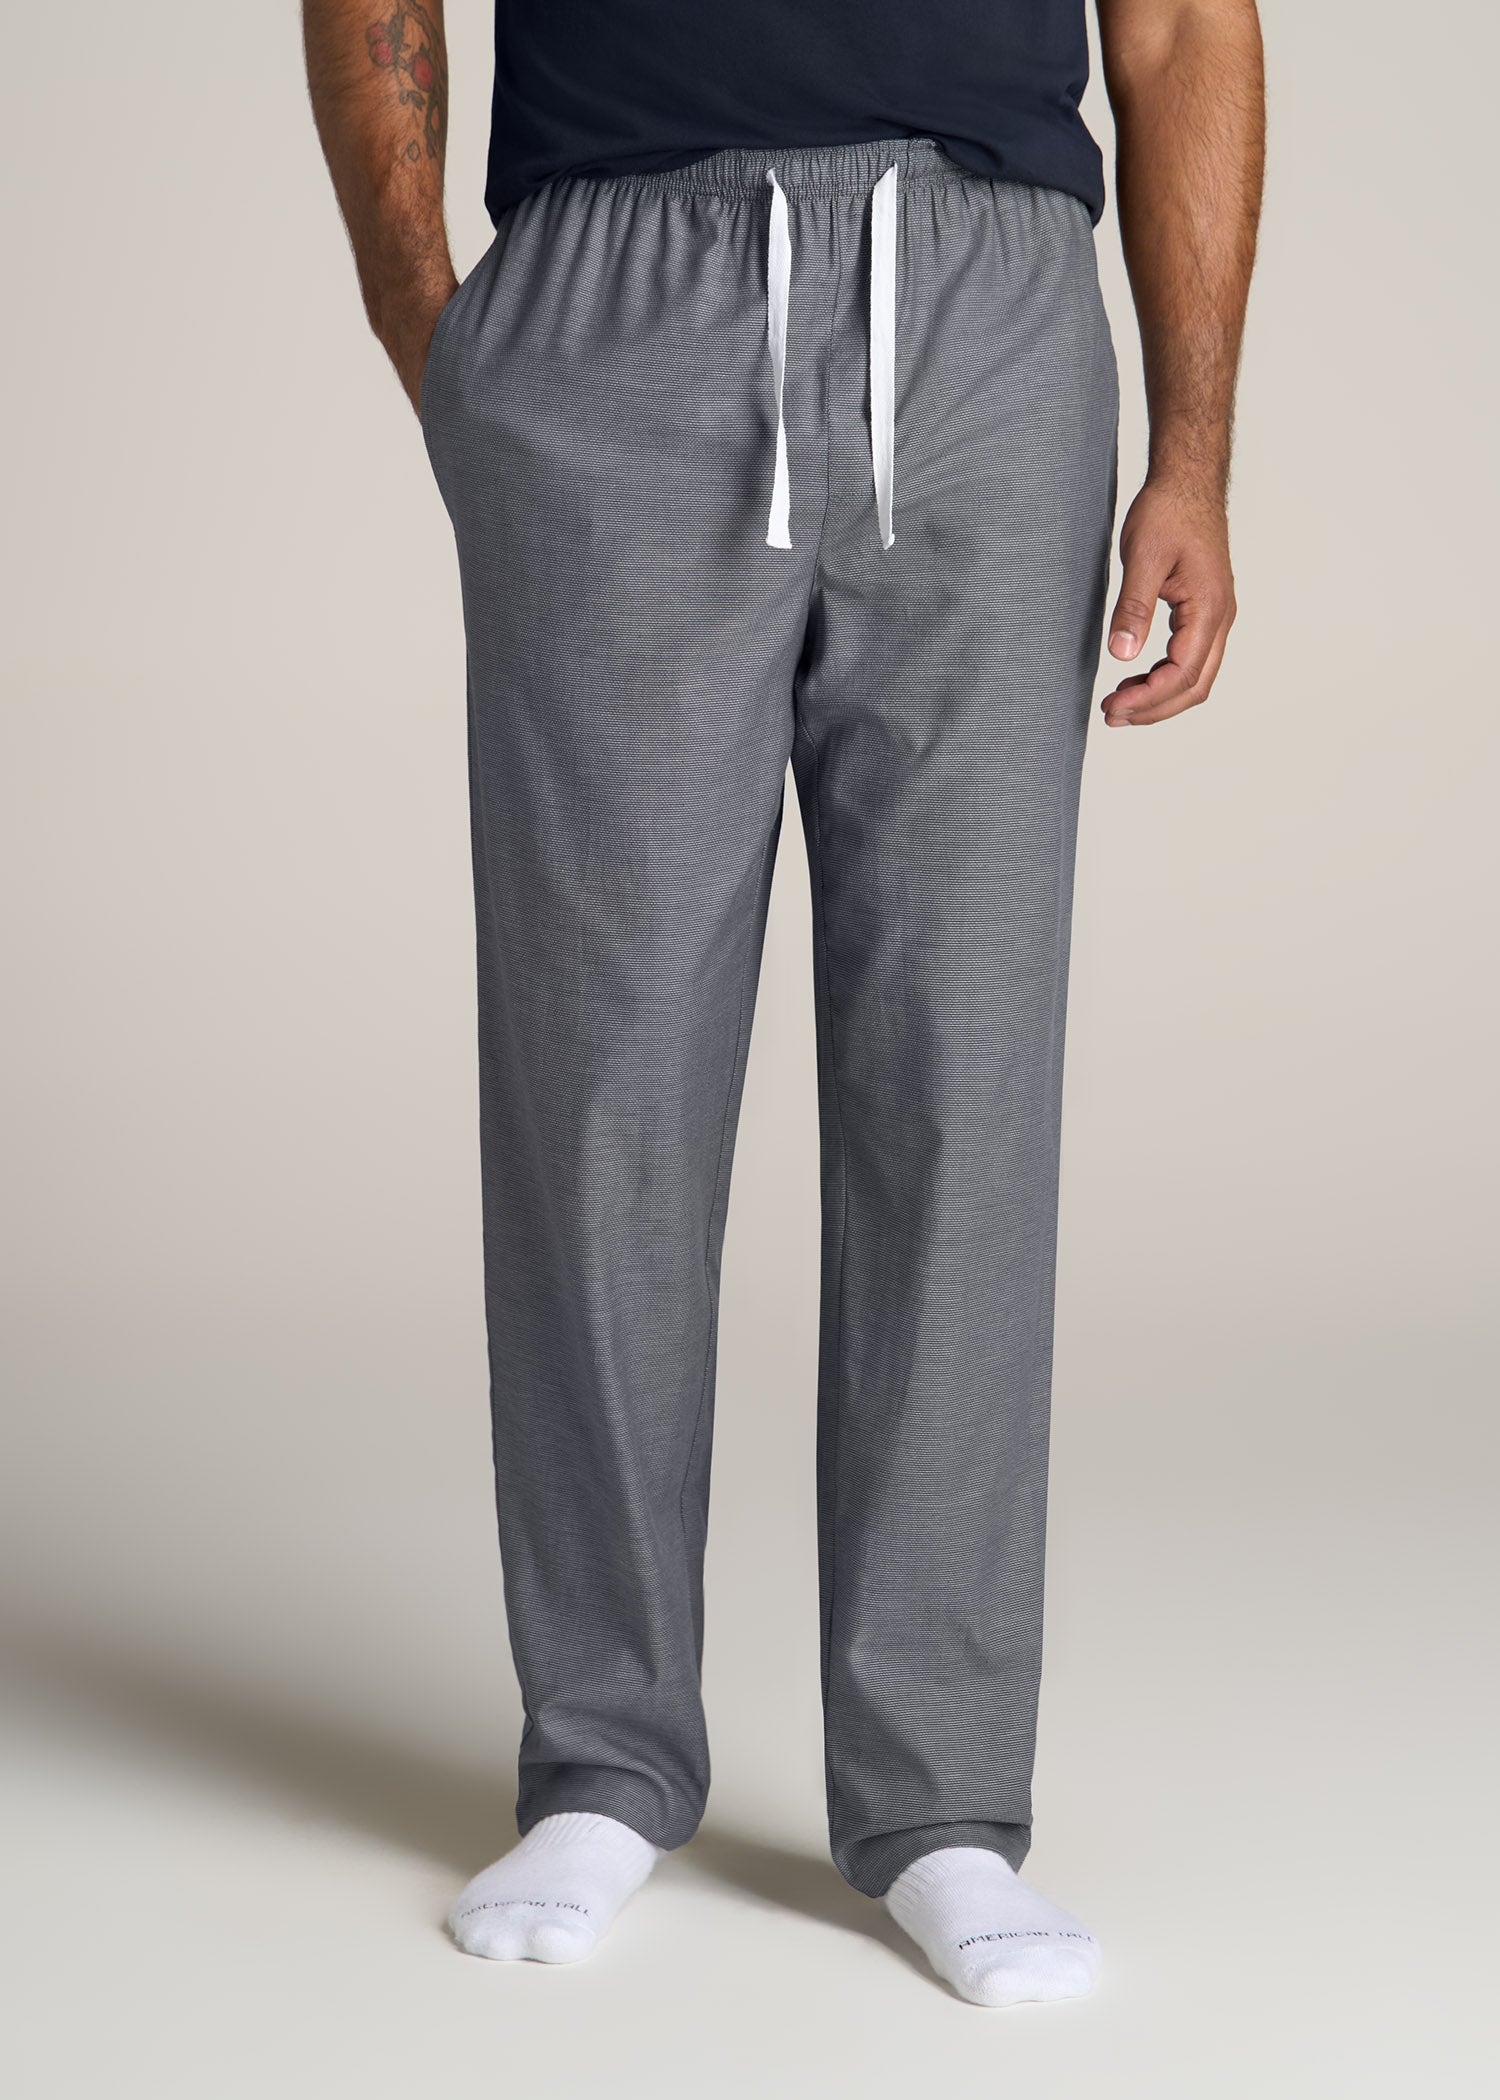 Jockey Men's Sleepwear Ultra Soft Sleep Pant, Black, Small : :  Clothing, Shoes & Accessories